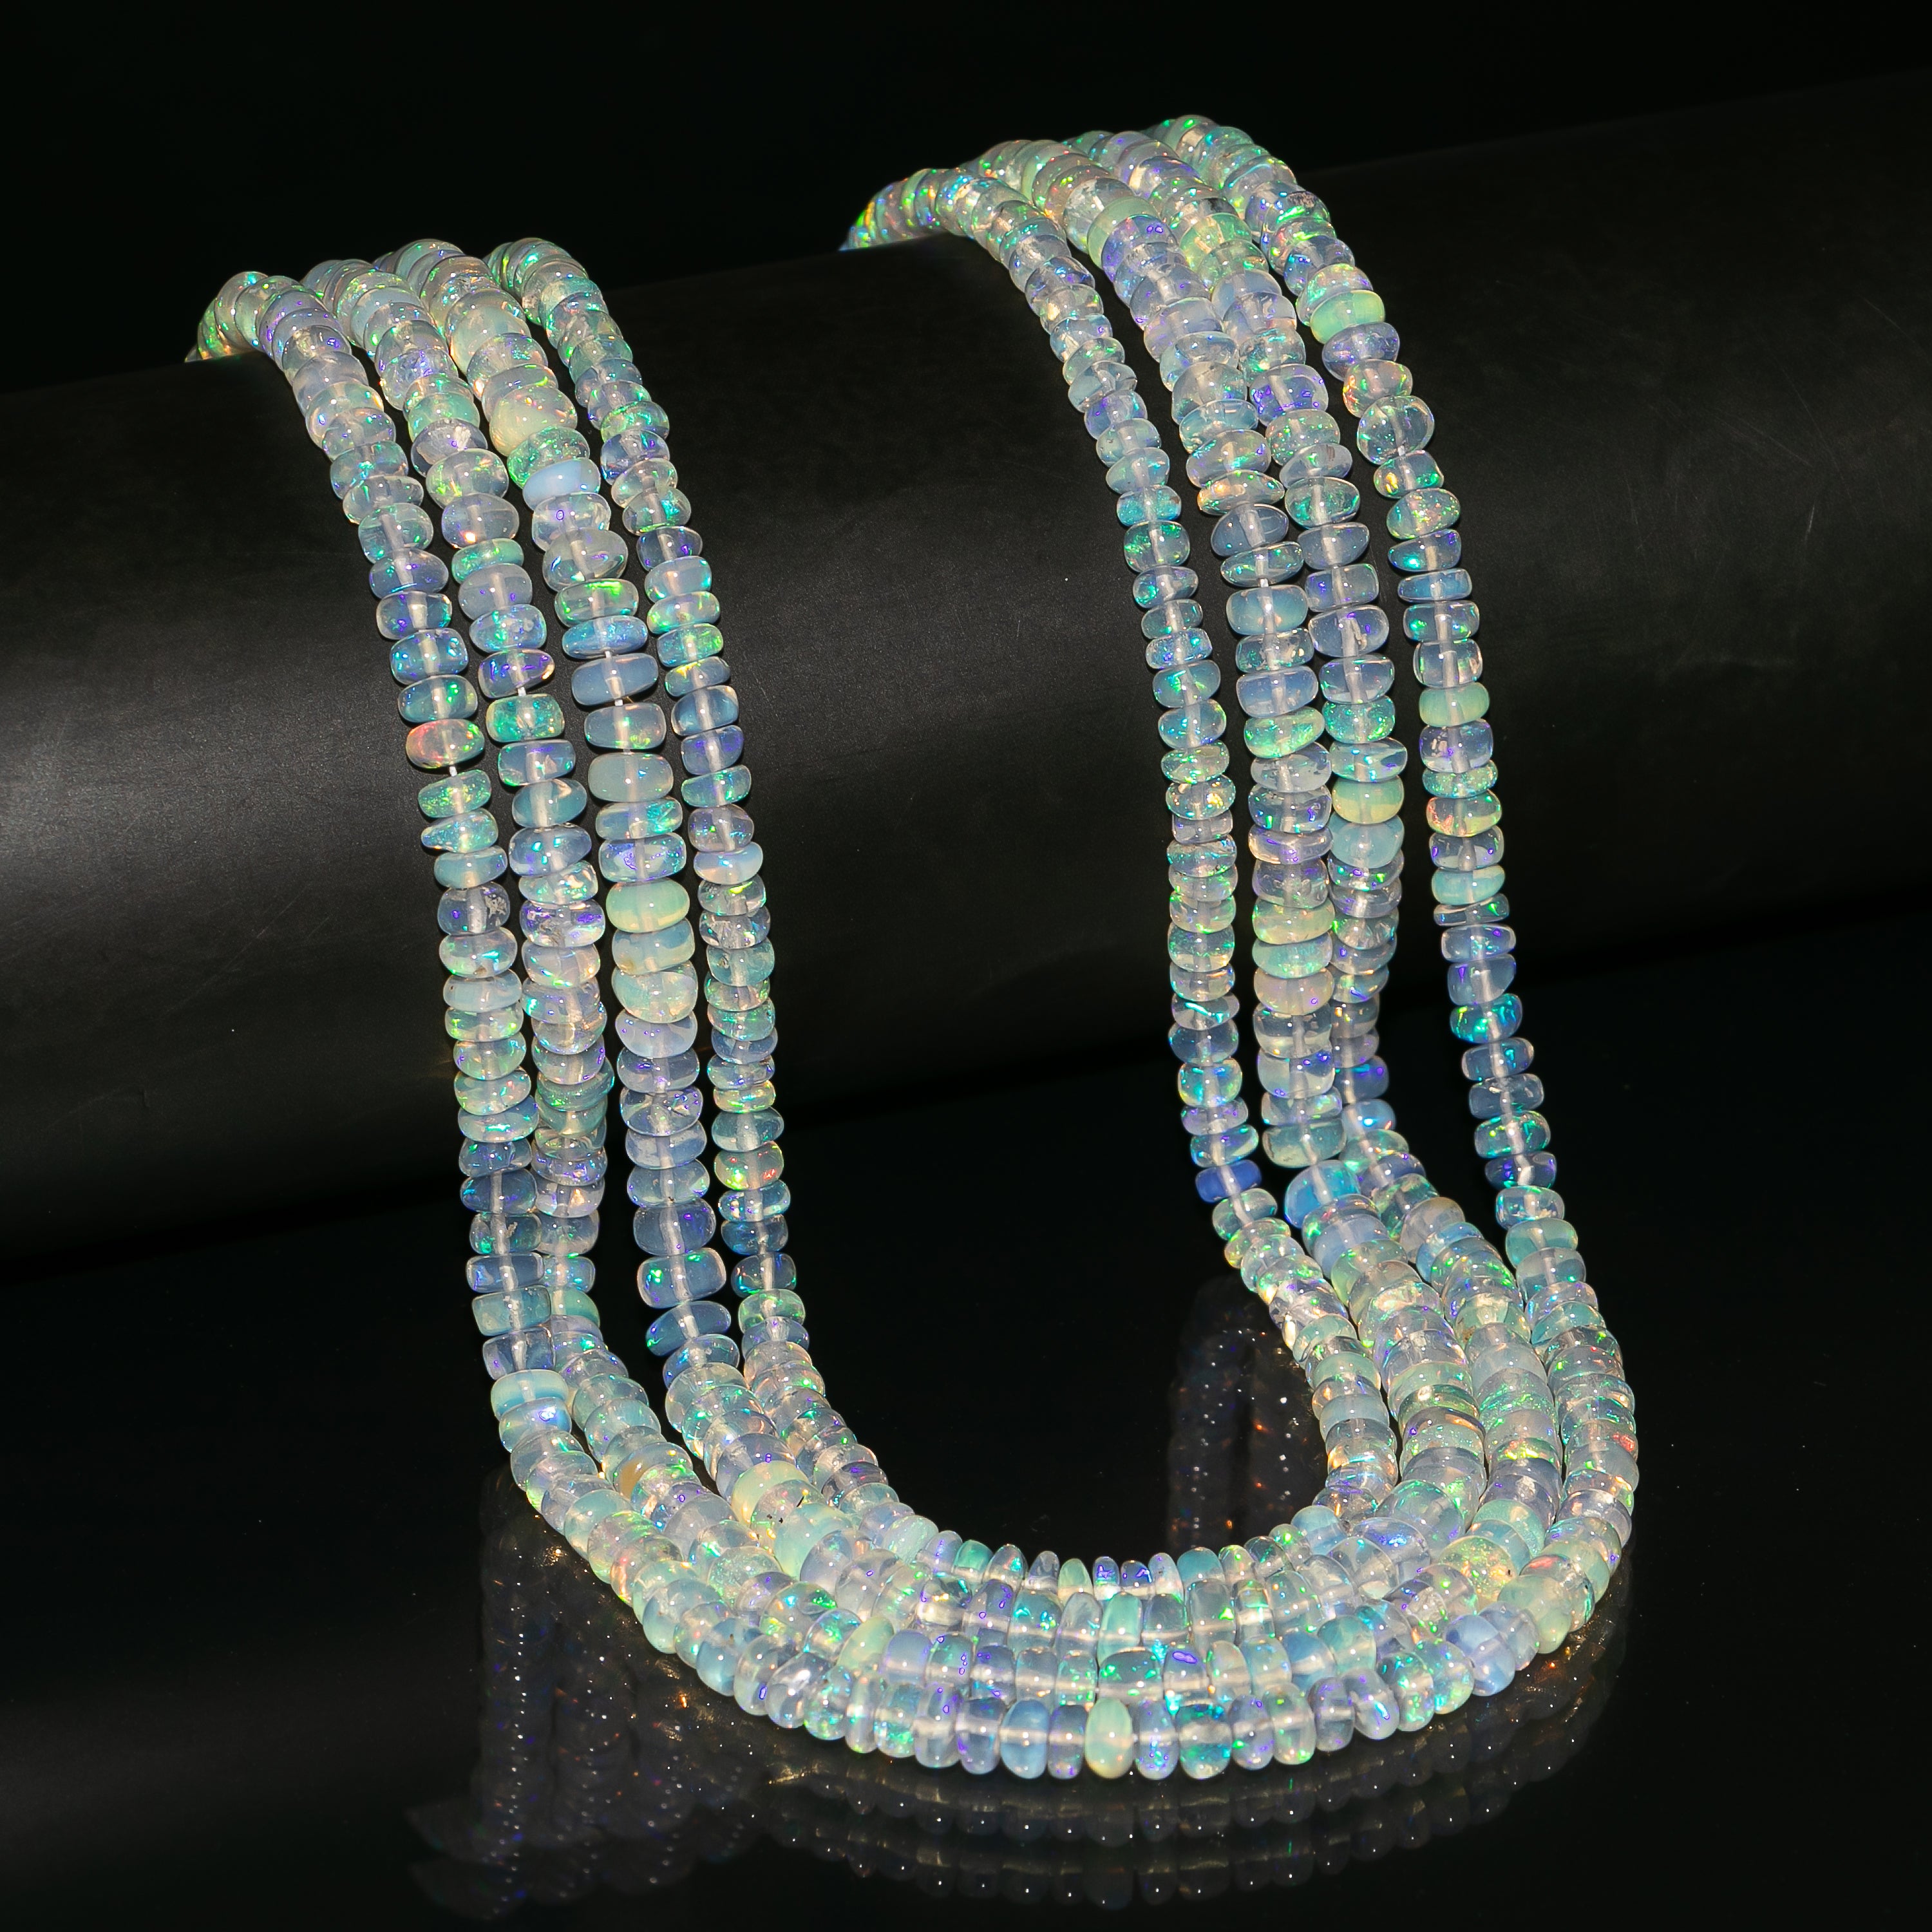 4-4.5 mm Ethiopian Opal Beads, Ethiopian Opal Smooth Beads, Ethiopian Opal Rondelle Beads, Opal Gemstone Beads, Opal Beads, Beads